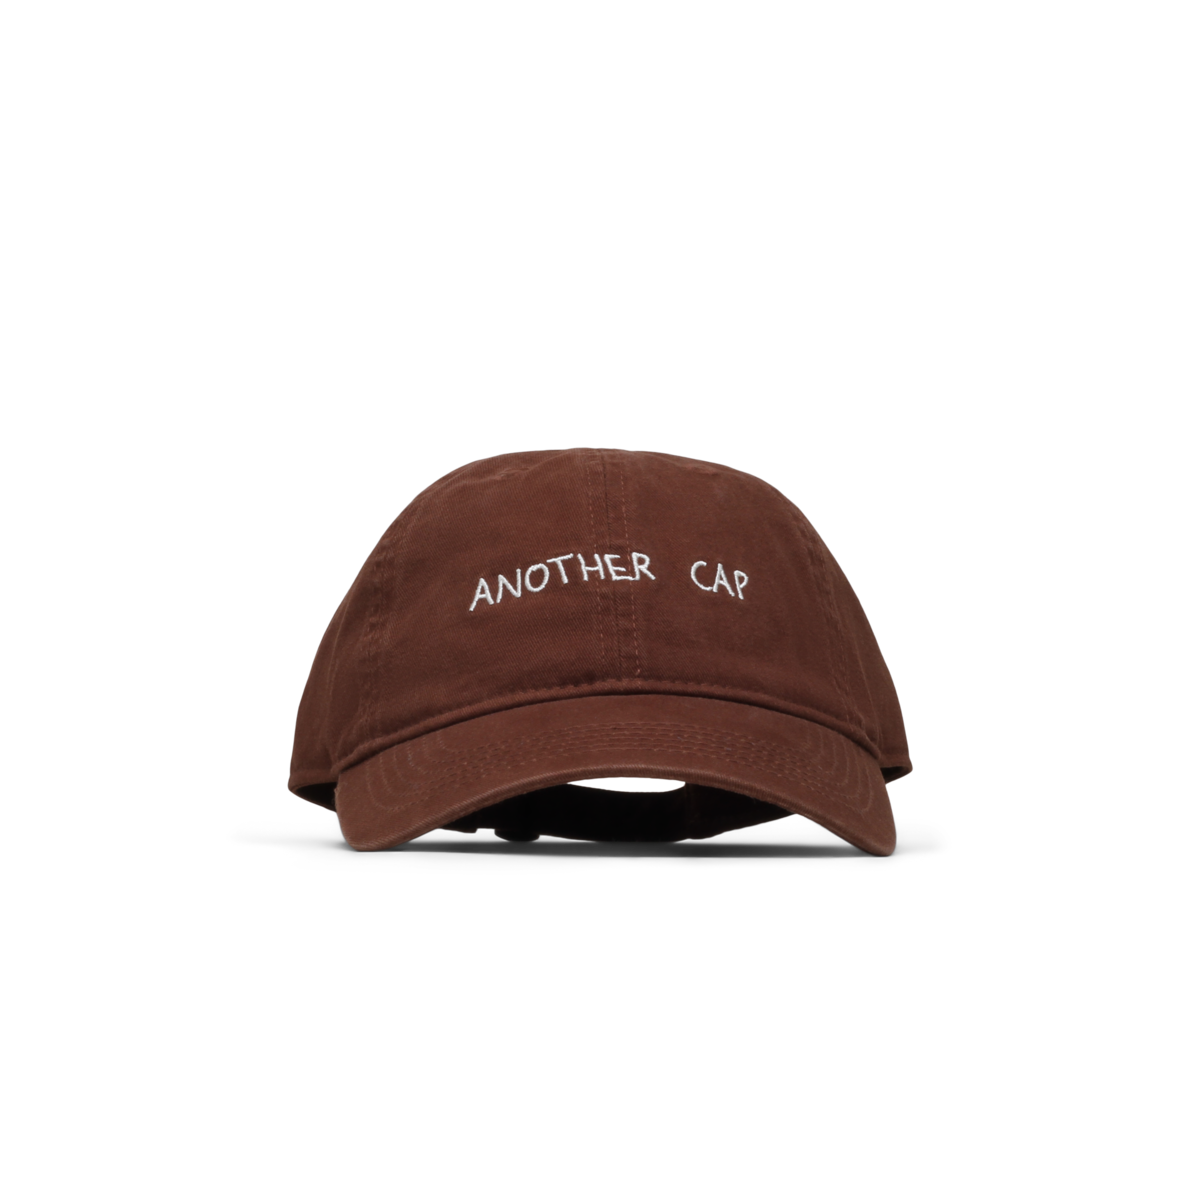 ANOTHER Cap 1.0